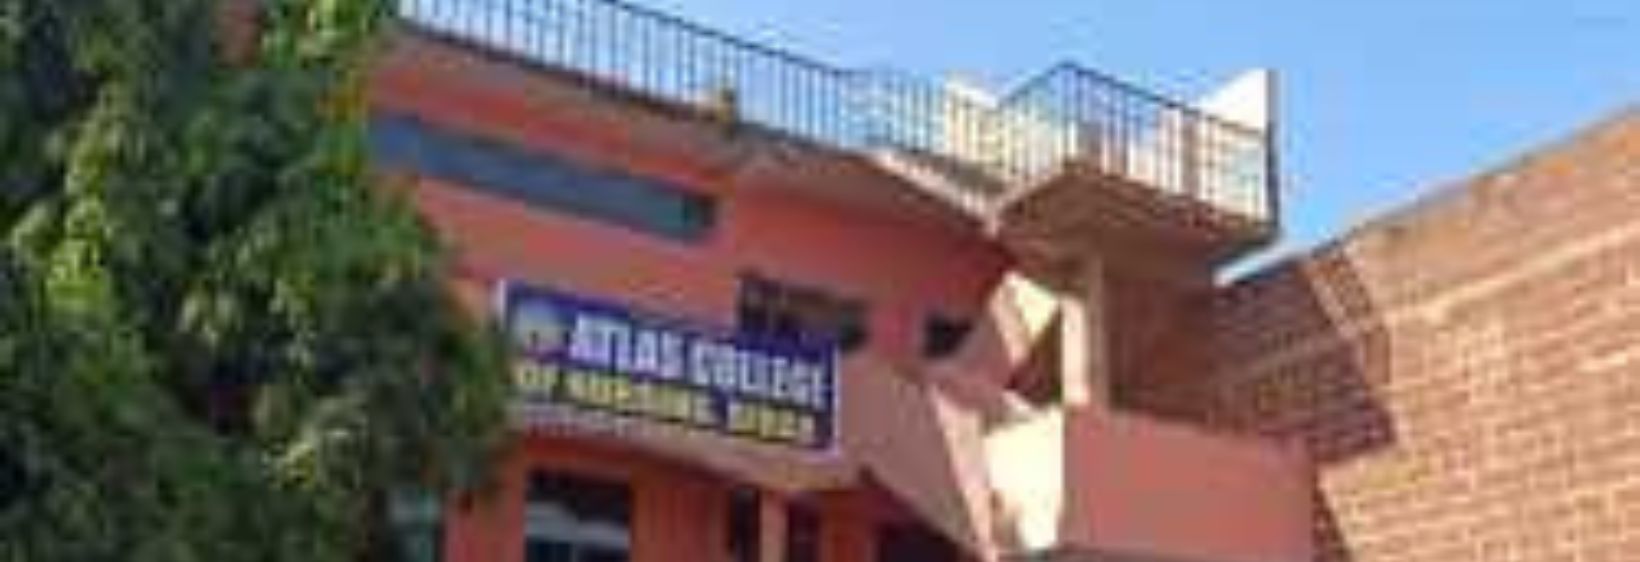 Atlas College of Nursing - Bidar